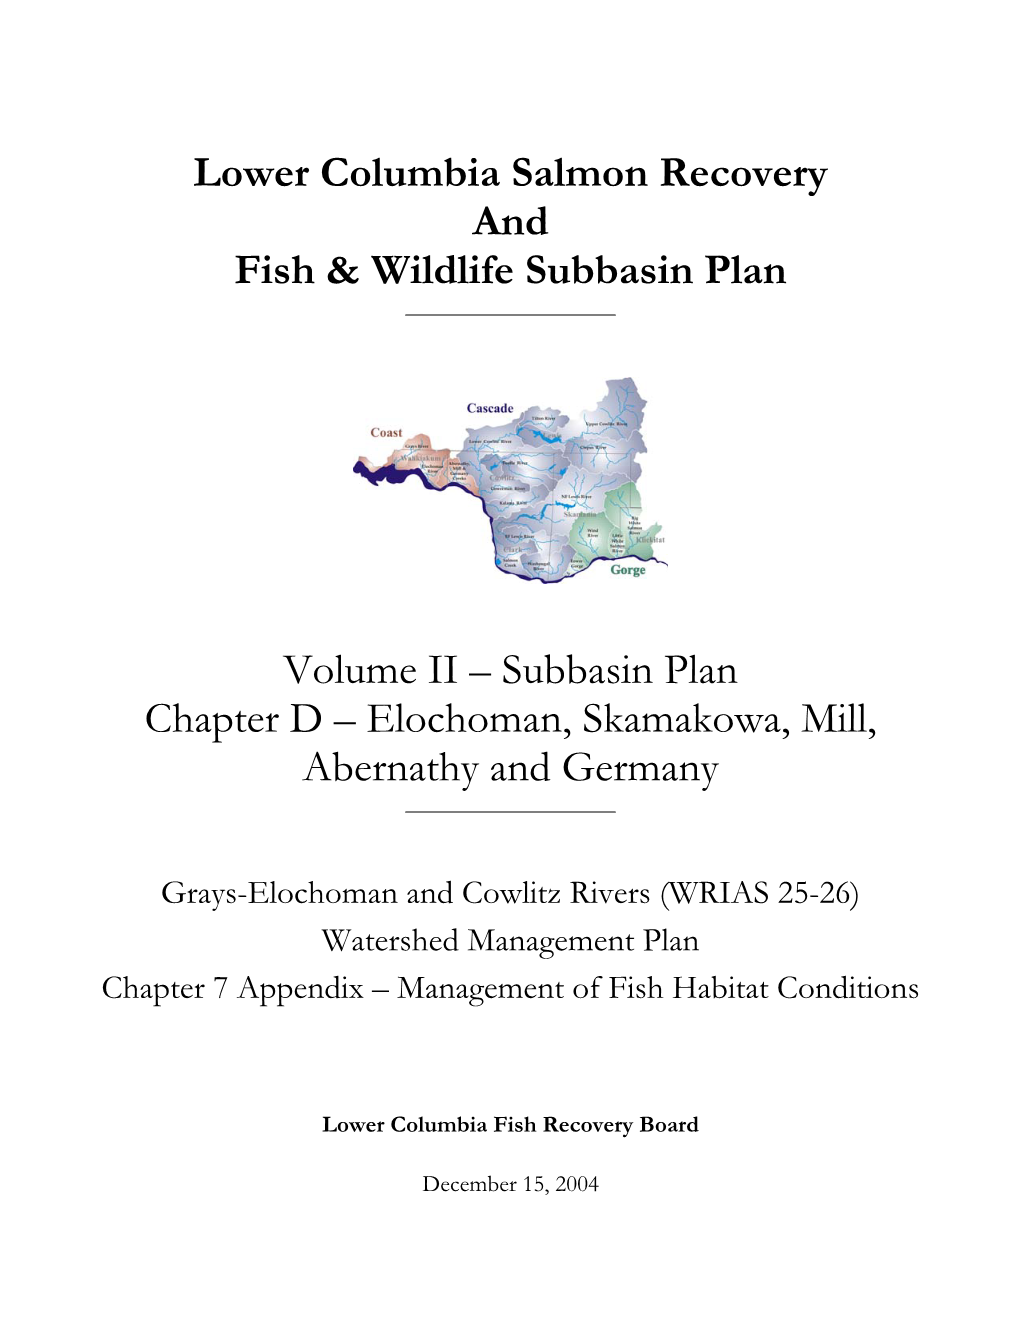 Lower Columbia Salmon Recovery and Fish & Wildlife Subbasin Plan